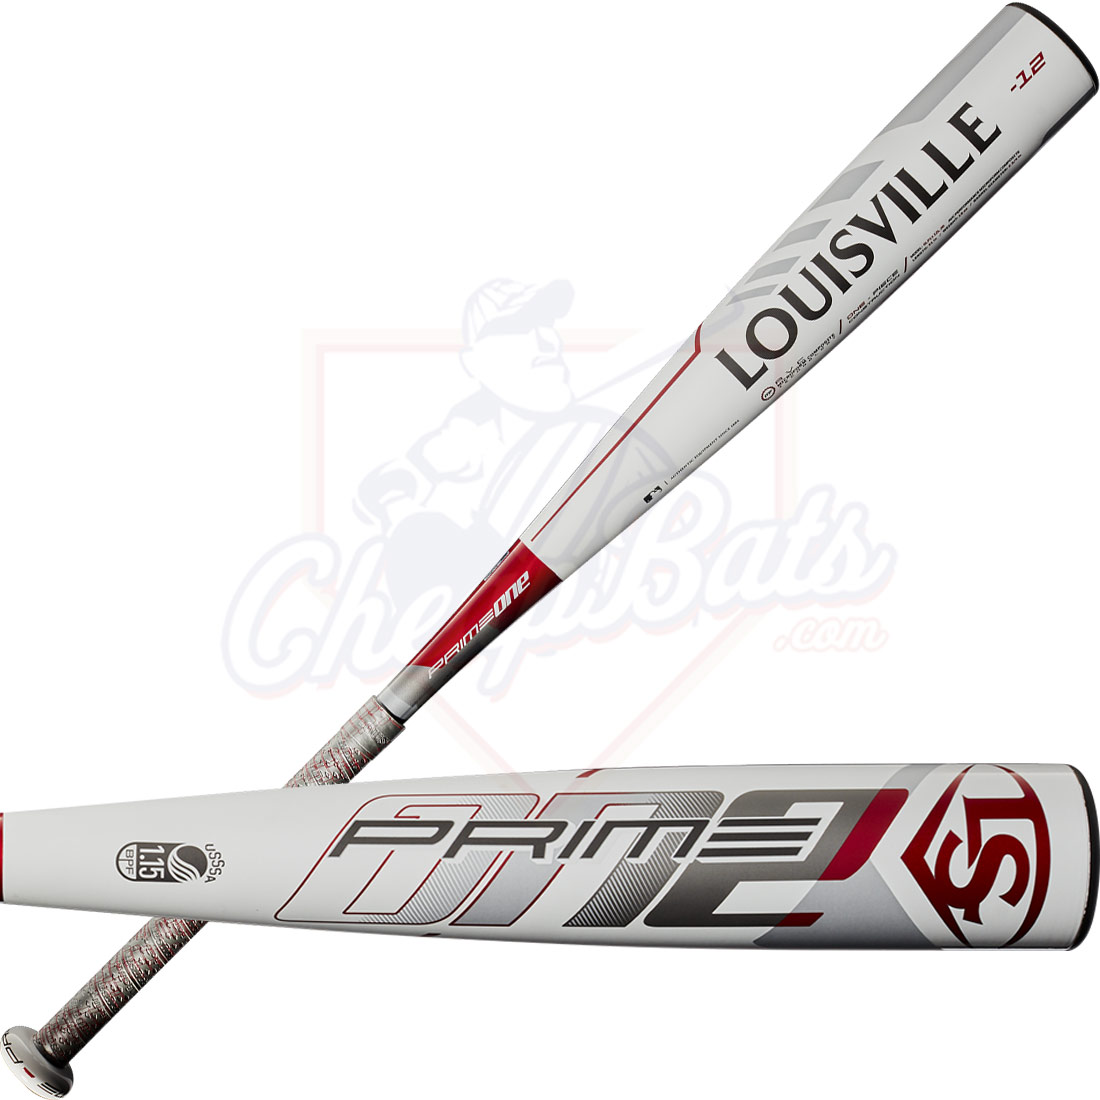 2020 Louisville Slugger Prime One Youth USSSA Baseball Bat -12oz WTLSLP1X12S20